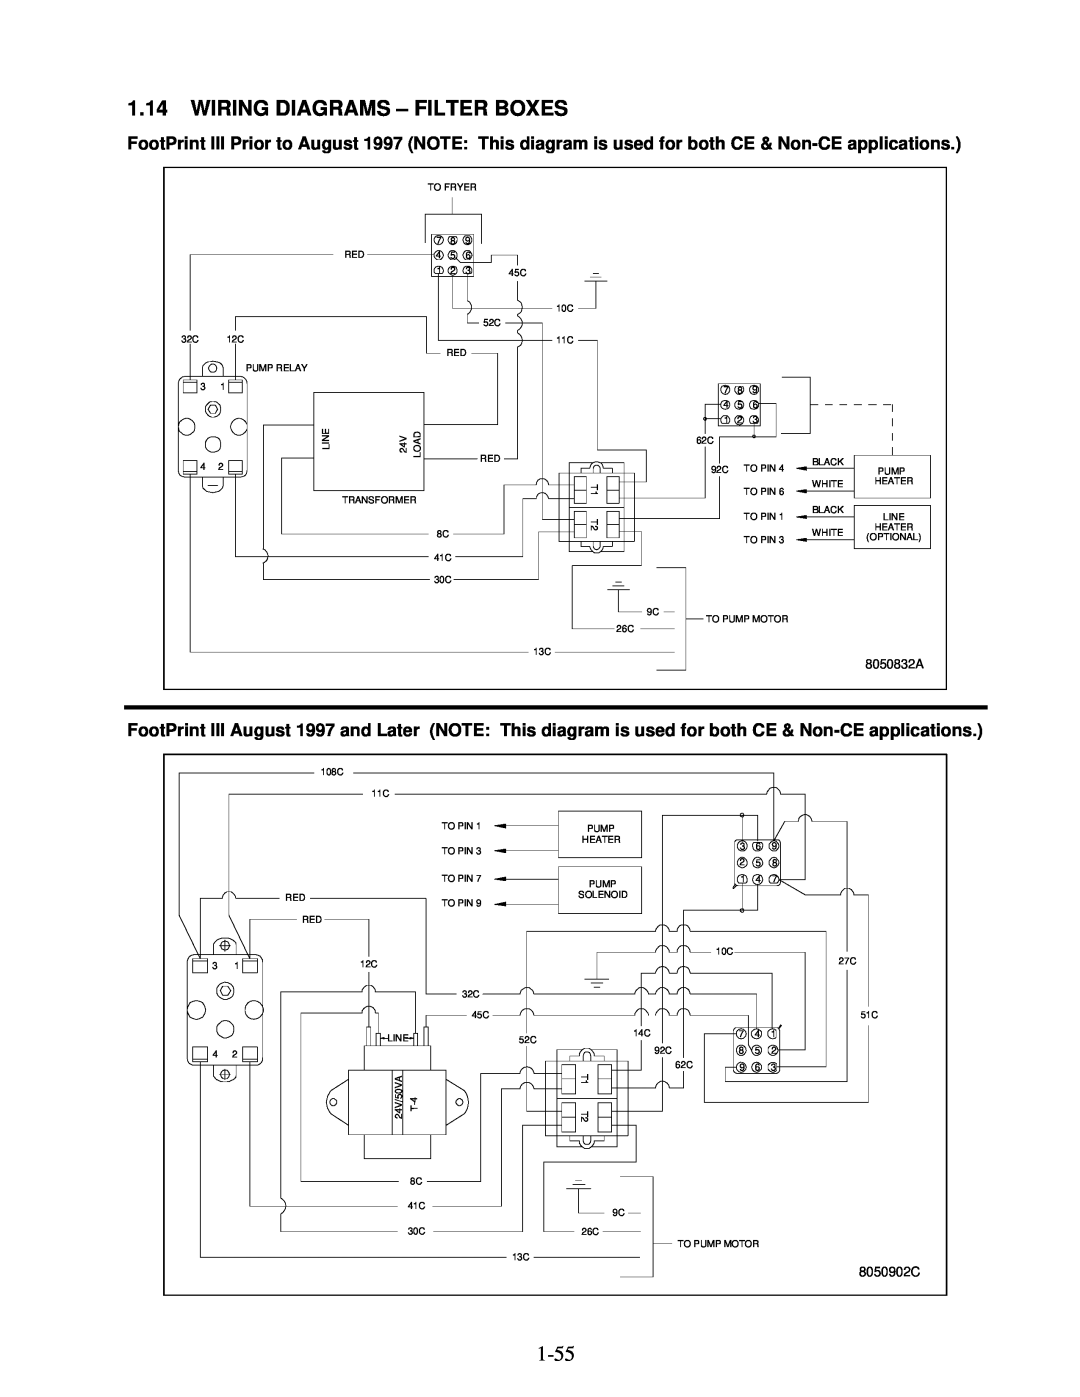 Frymaster H50 Series manual 1.14WIRING DIAGRAMS – FILTER BOXES, 8050902C 